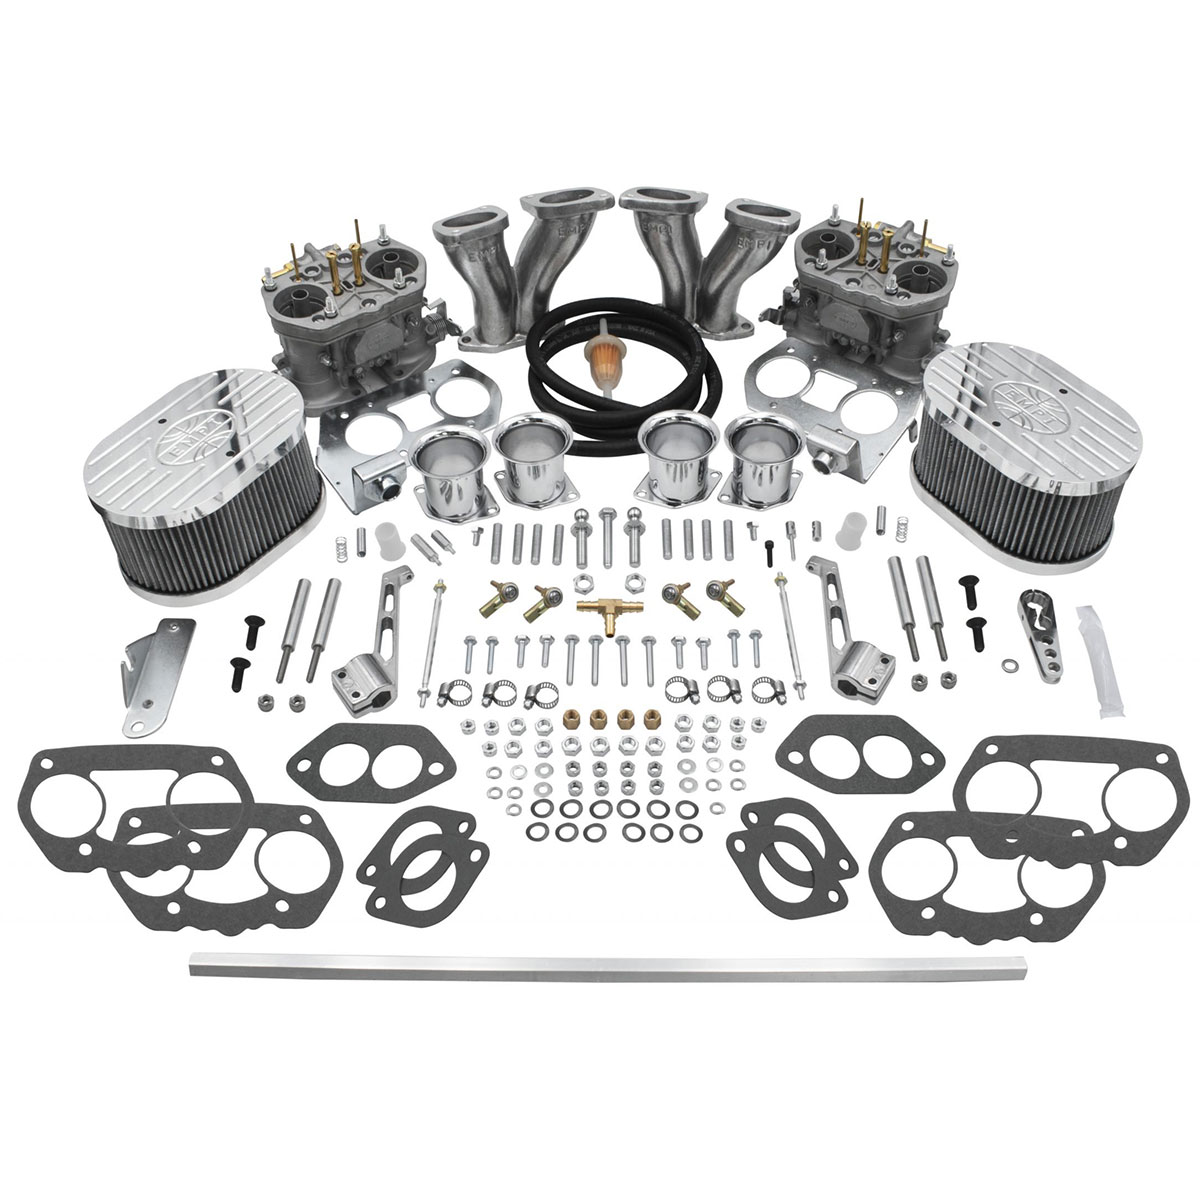 EMPI Dual VW Carburetor Kit - 44 HPMX - Offset Manifolds - Type 1 - Billet Air Cleaners